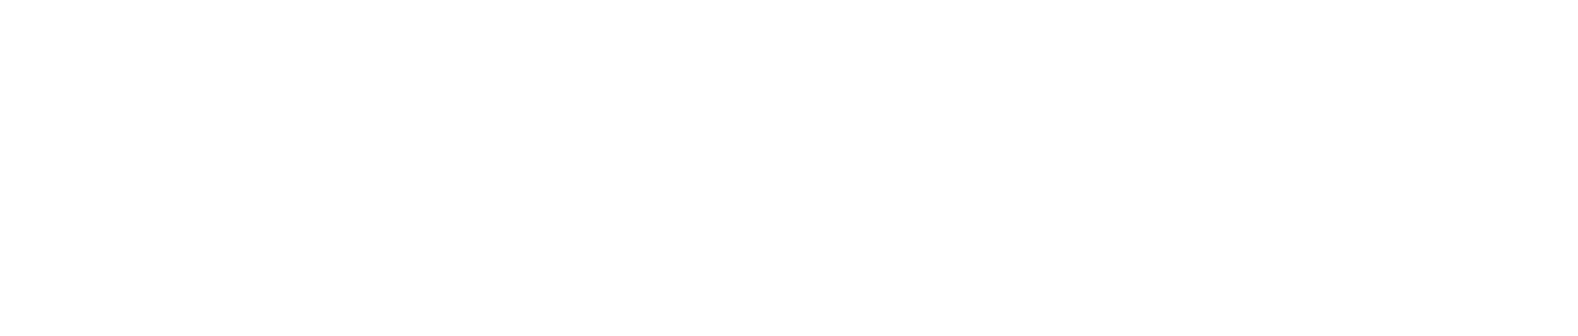 Aterian Logo groß für dunkle Hintergründe (transparentes PNG)